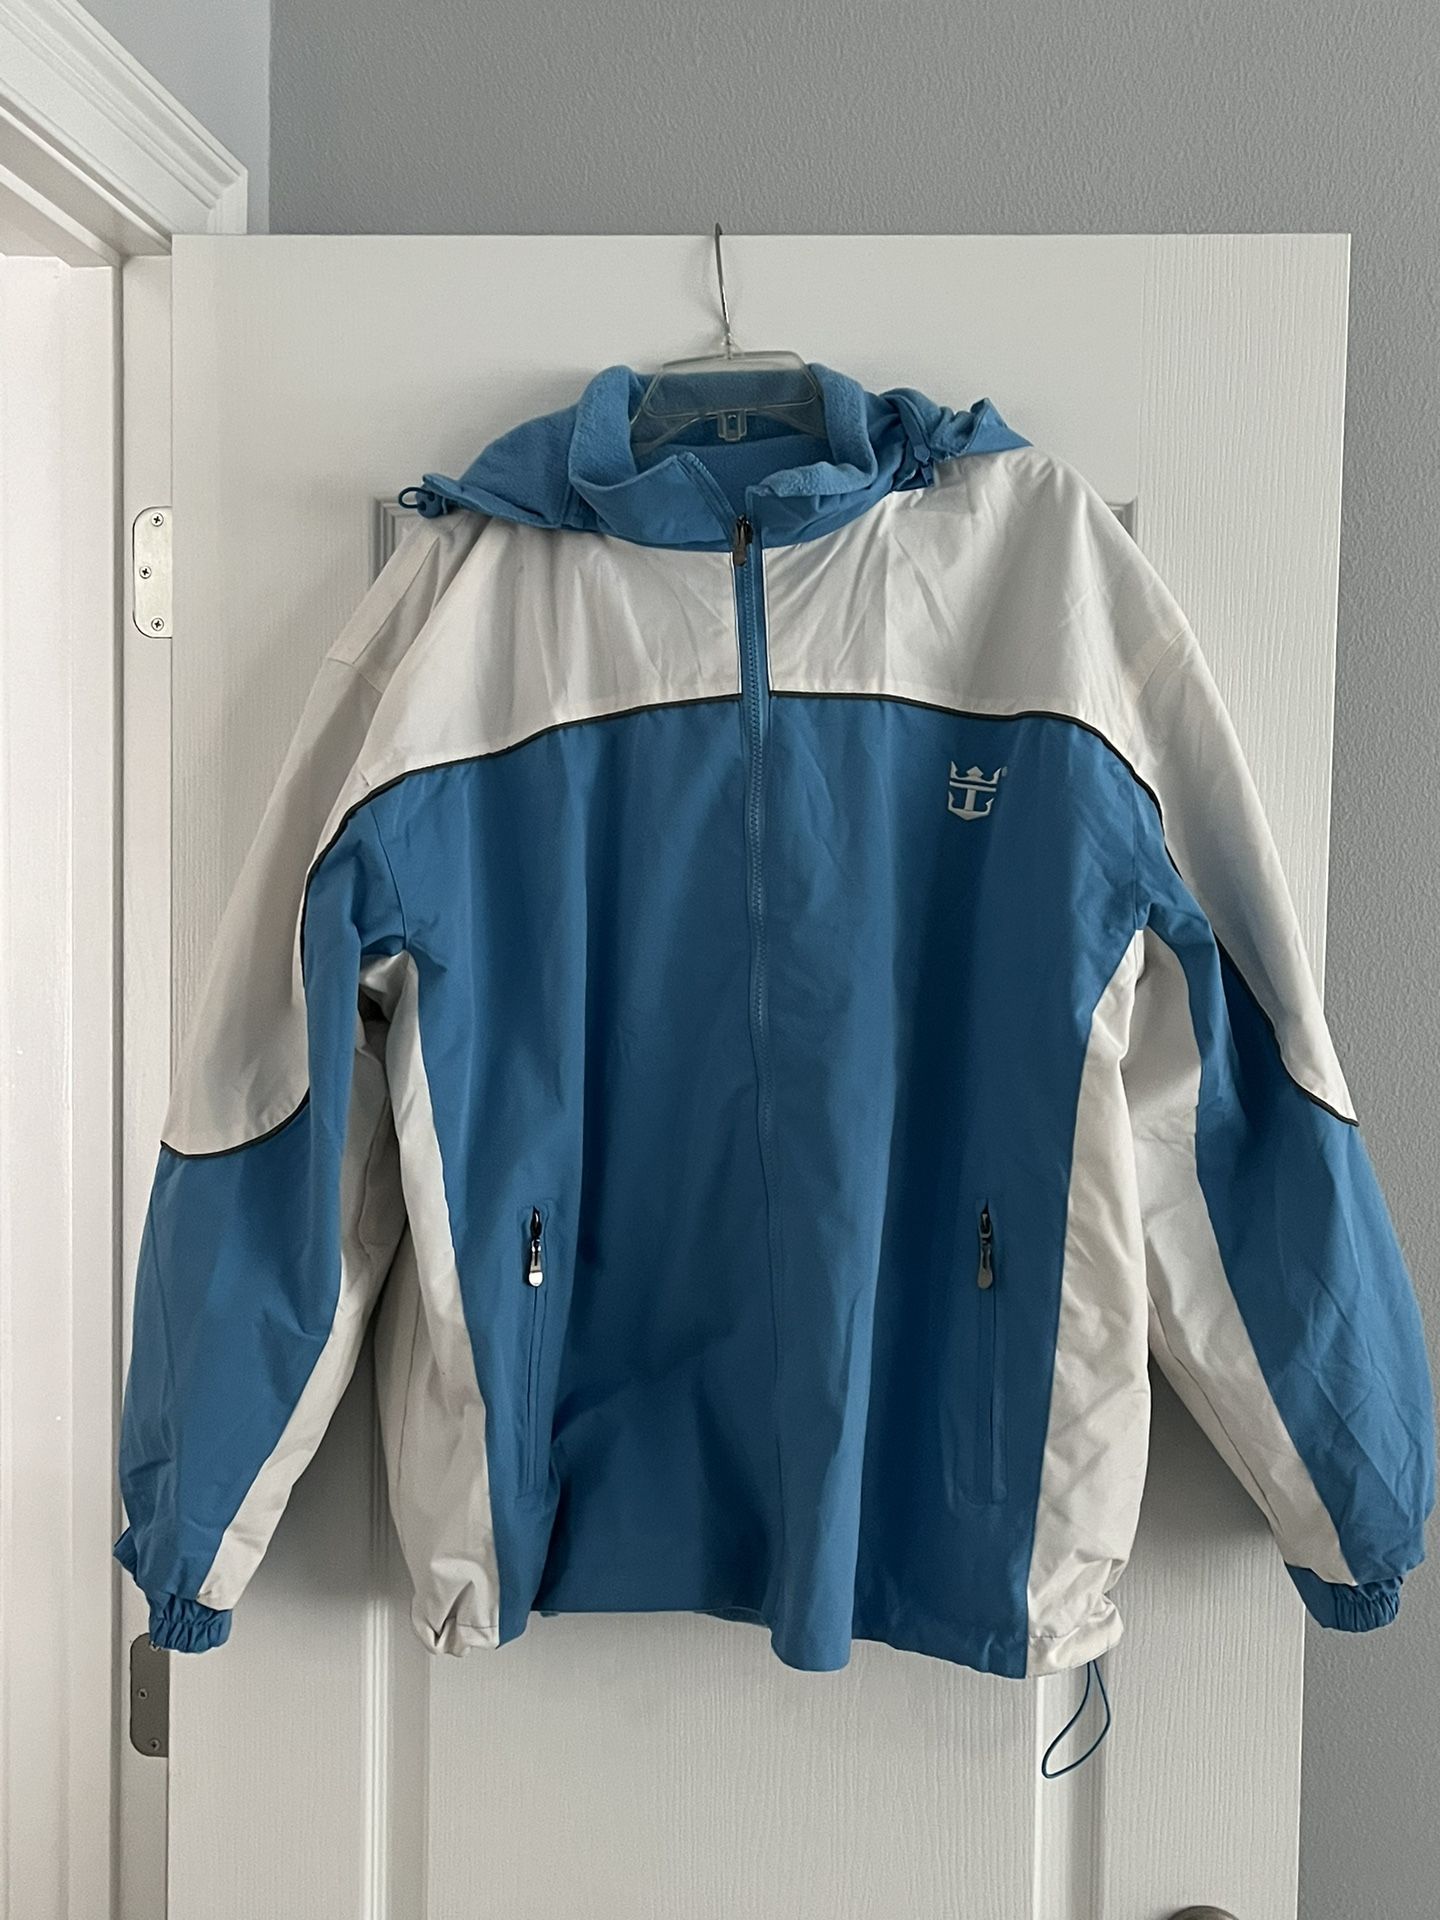 XL Men’s Royal Caribbean Reversible Rain/ Snow Jacket With Hood. Like New